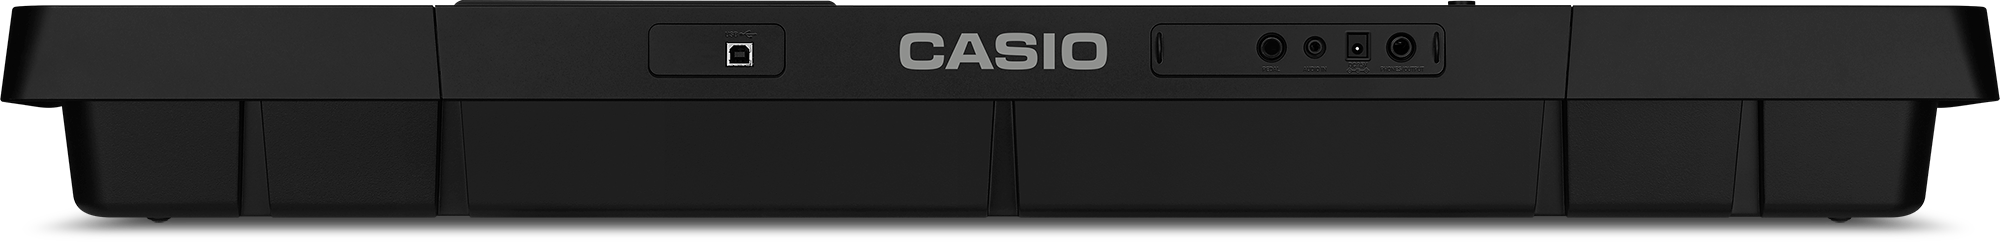 Синтезатор Casio CT-X700